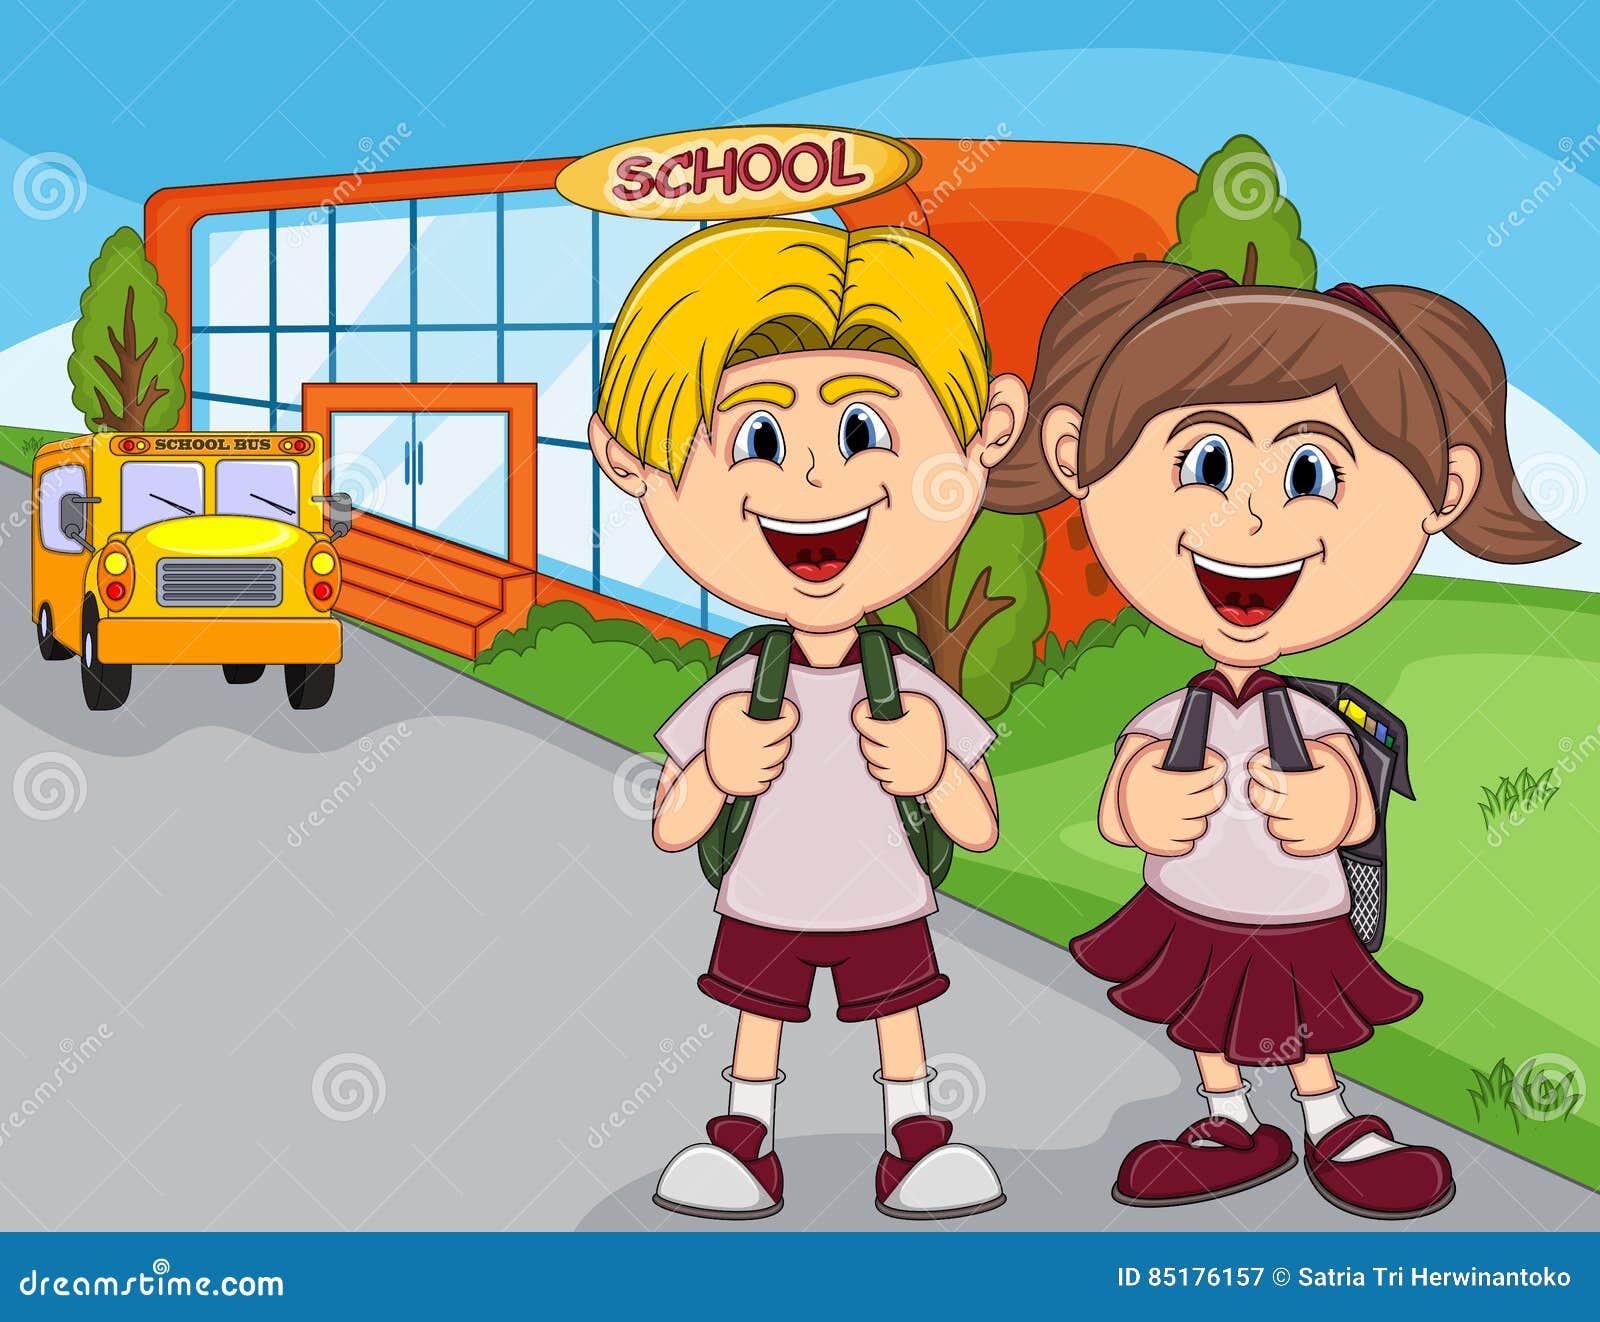 Children Go To School Cartoon Stock Vector - Illustration of elementary,  house: 85176157